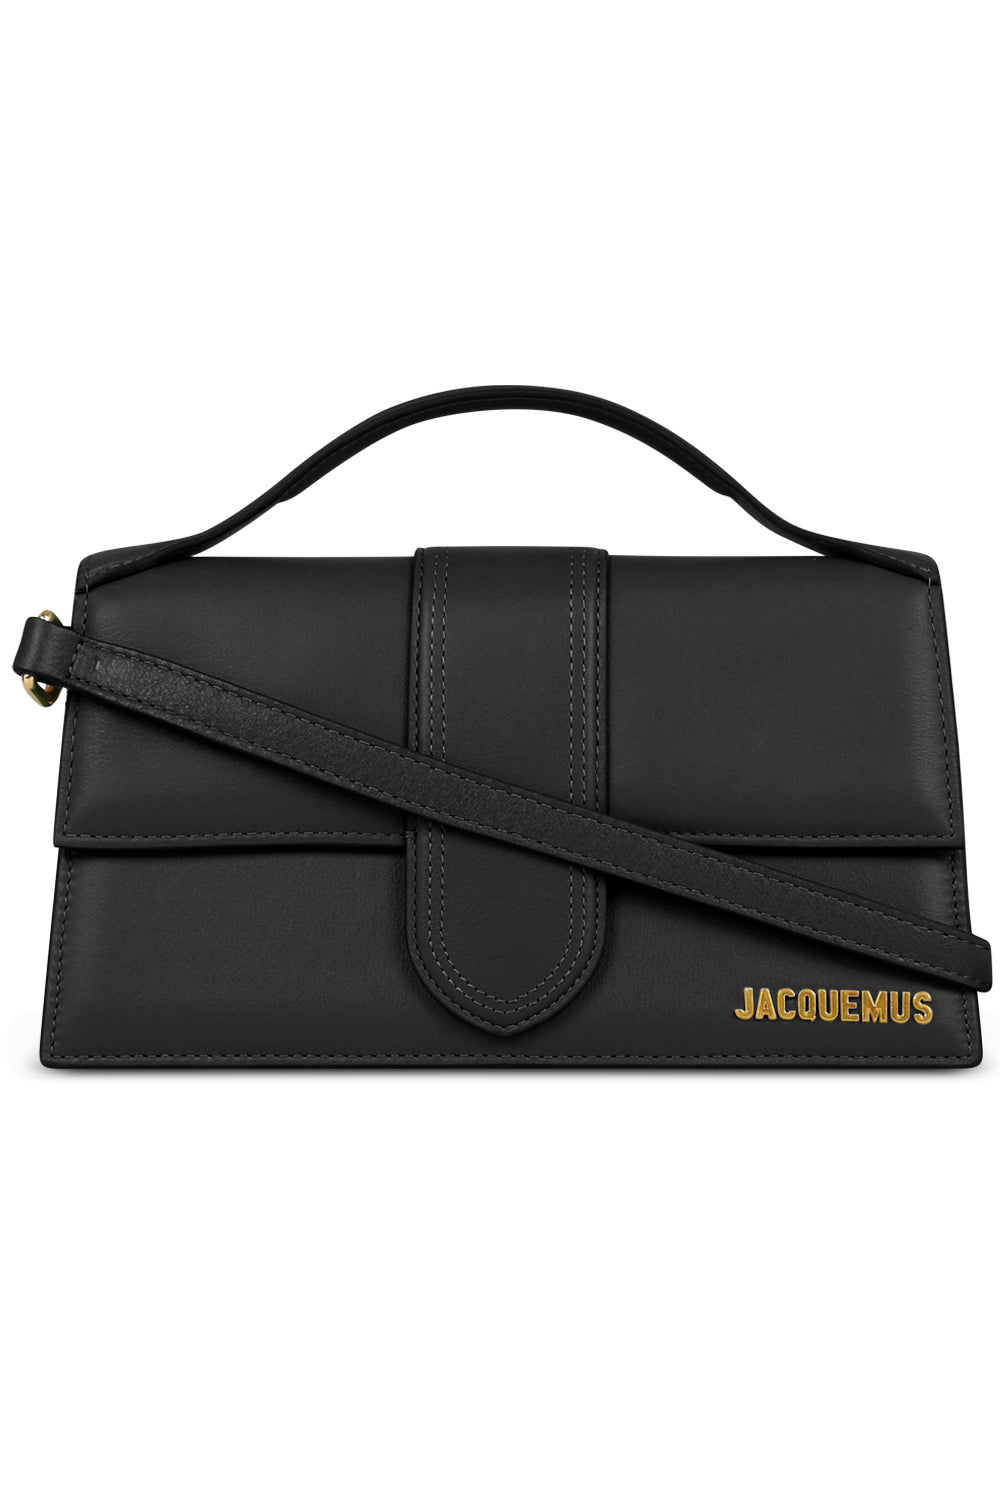 JACQUEMUS BAGS BLACK LE GRAND BAMBINO BAG | BLACK